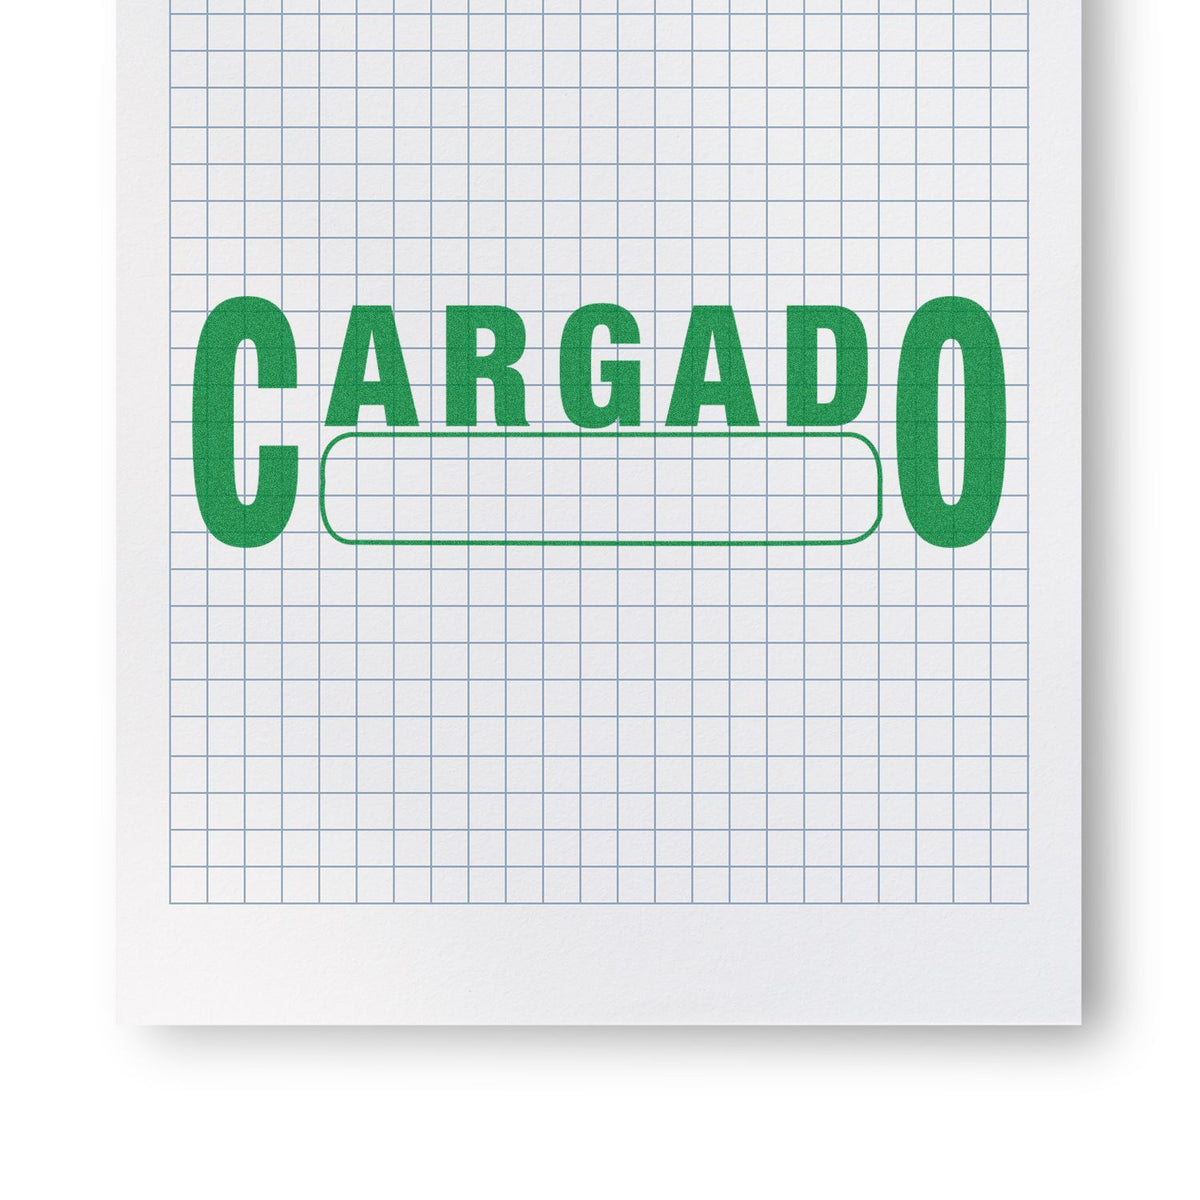 Large Self-Inking Cargado Stamp In Use